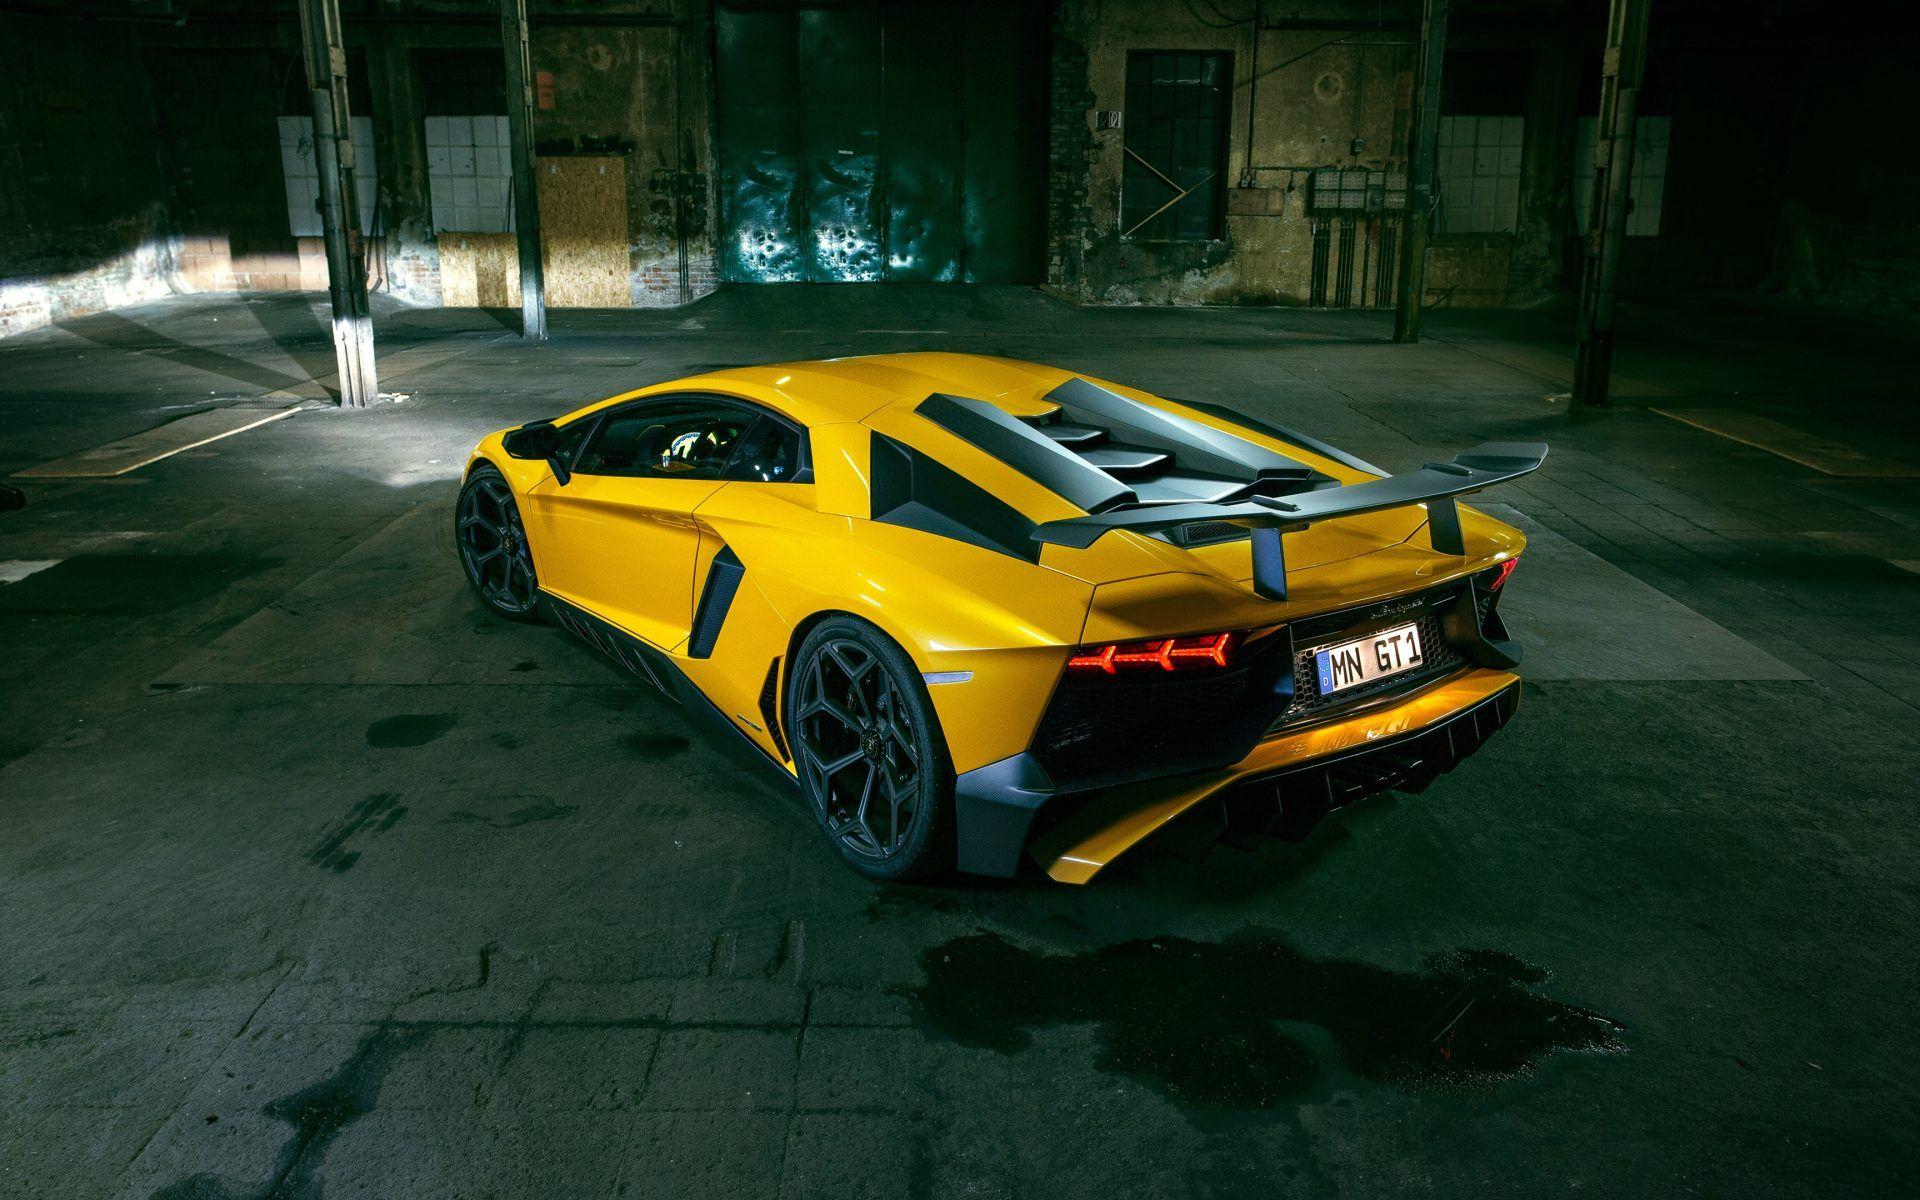 Lamborghini Aventador LP 750 4 SV Yellow Supercar Back View 4k HD